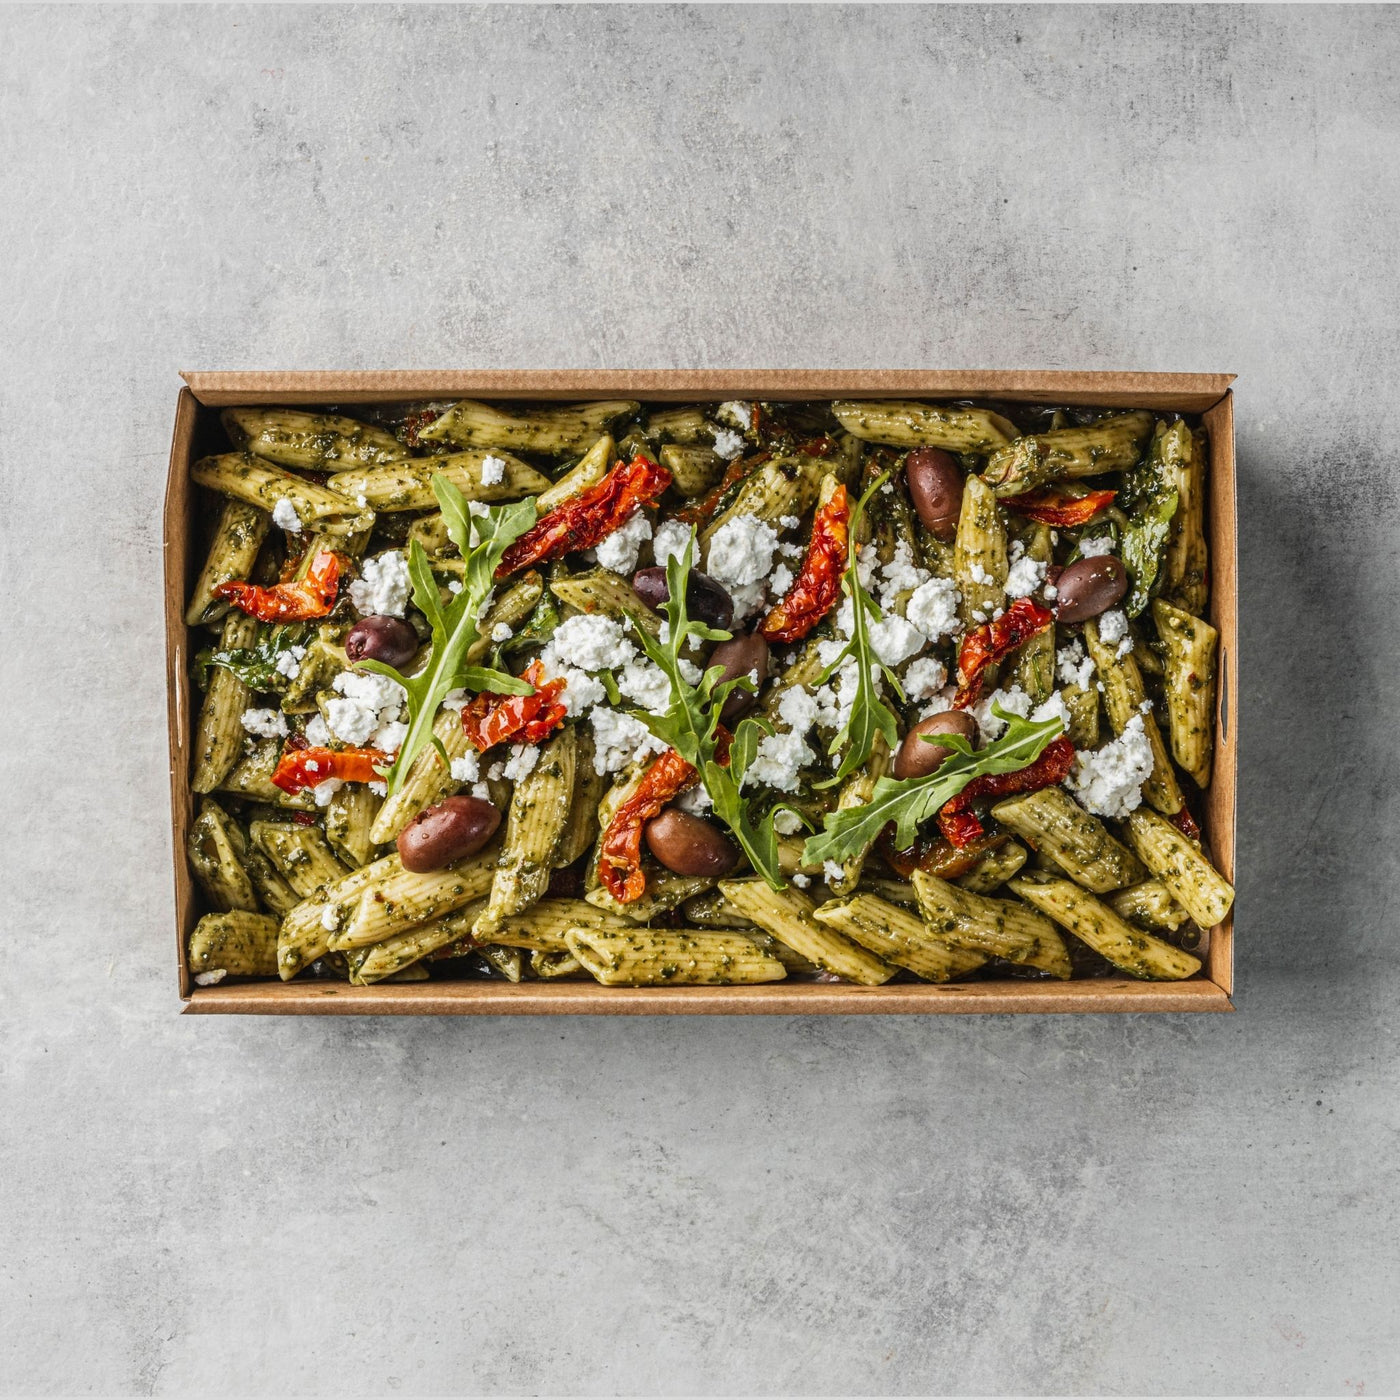 Salad Platter: Vegetarian Pesto Penne